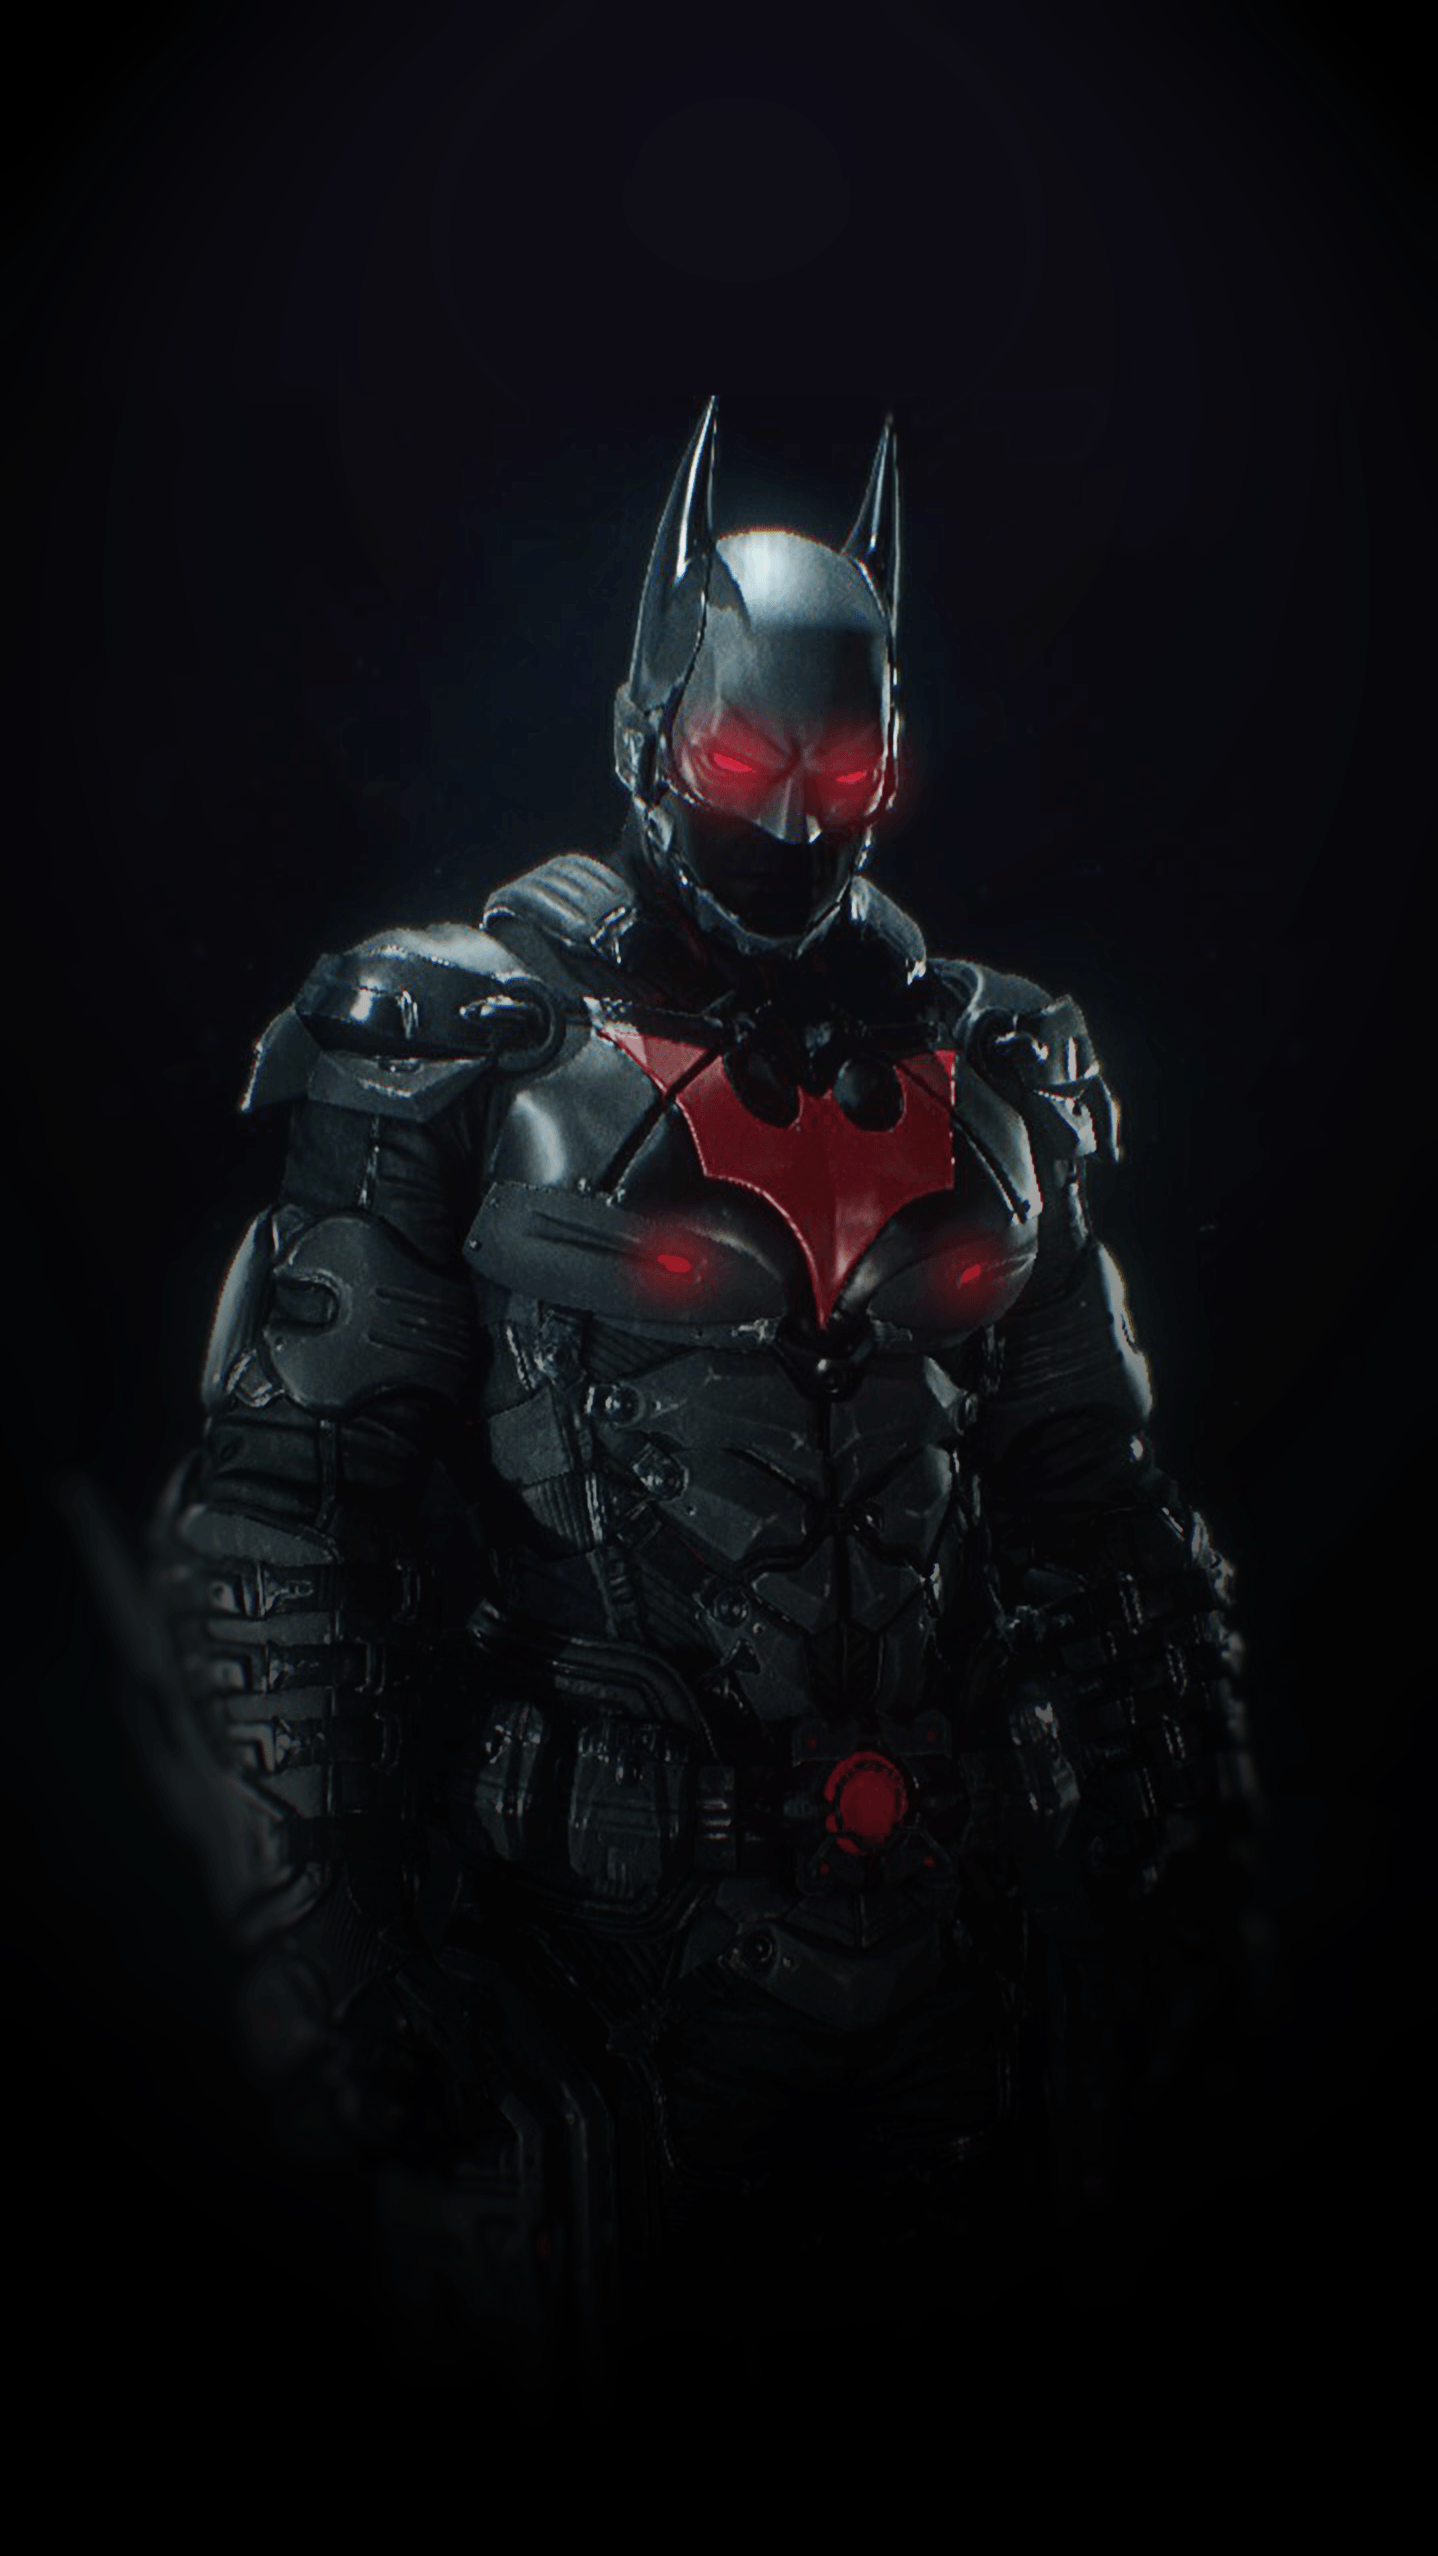 Batman Arkham Knight Suit, Batman Beyond Skin. A wallpaper